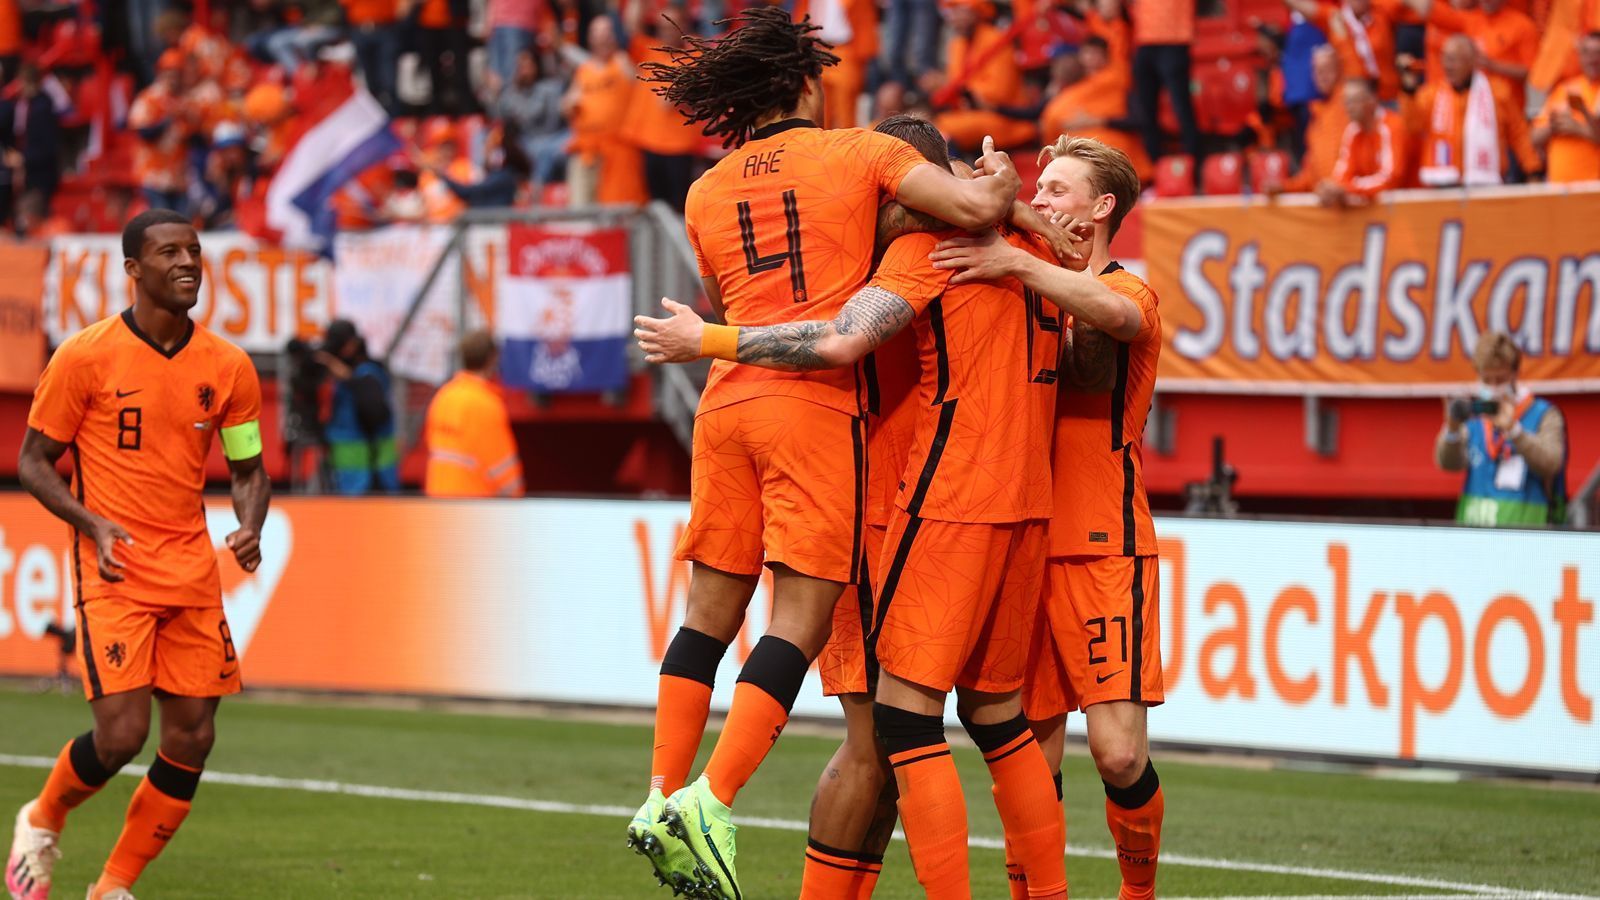 
                <strong>Niederlande</strong><br>
                Aktuelle Weltranglisten-Platzierung: 16. - Punkte: 1598,04
              